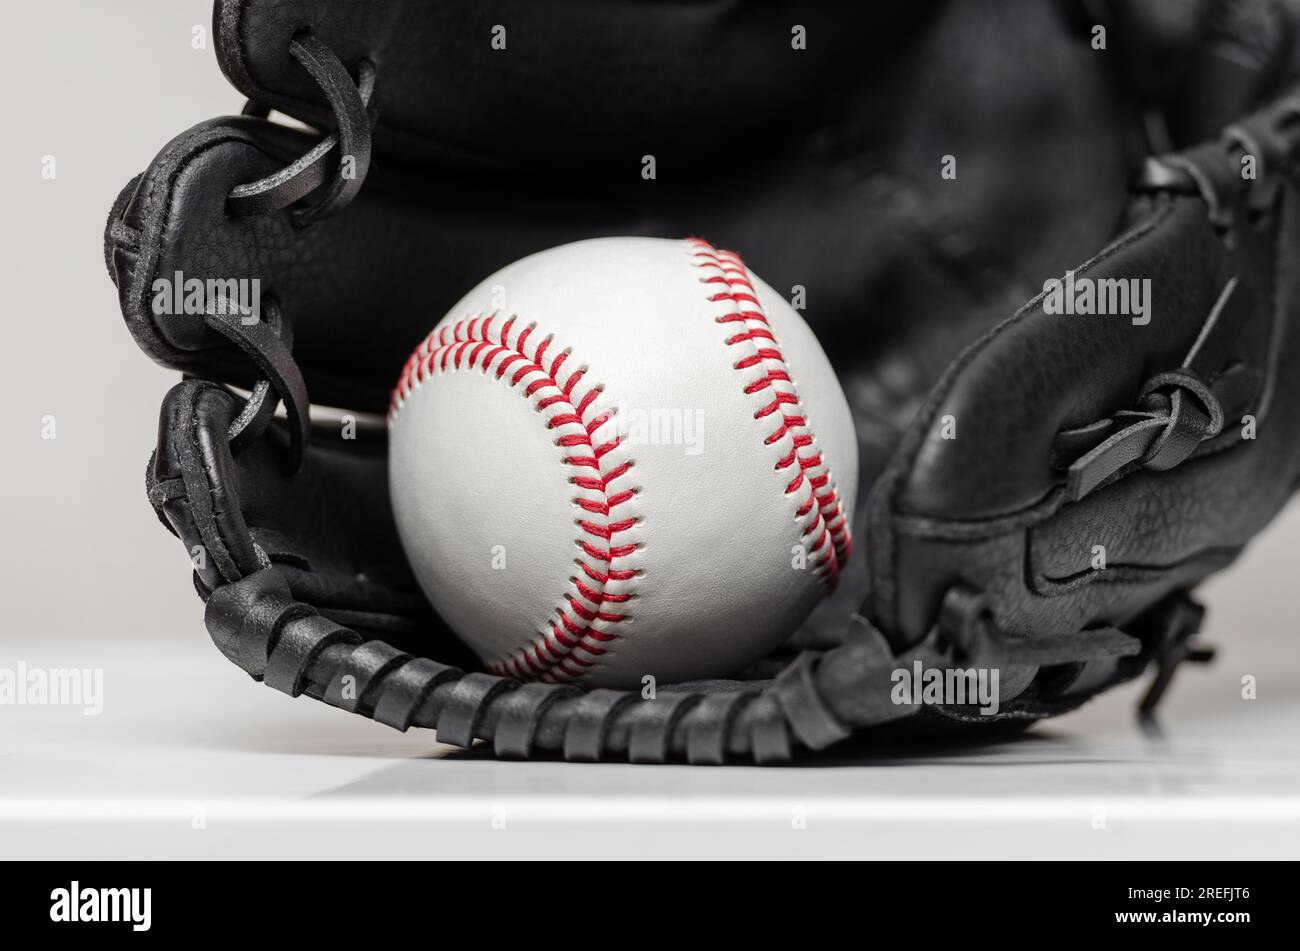 Closeup of a white baseball ball with red stitches inside baseball glove Stock Photo